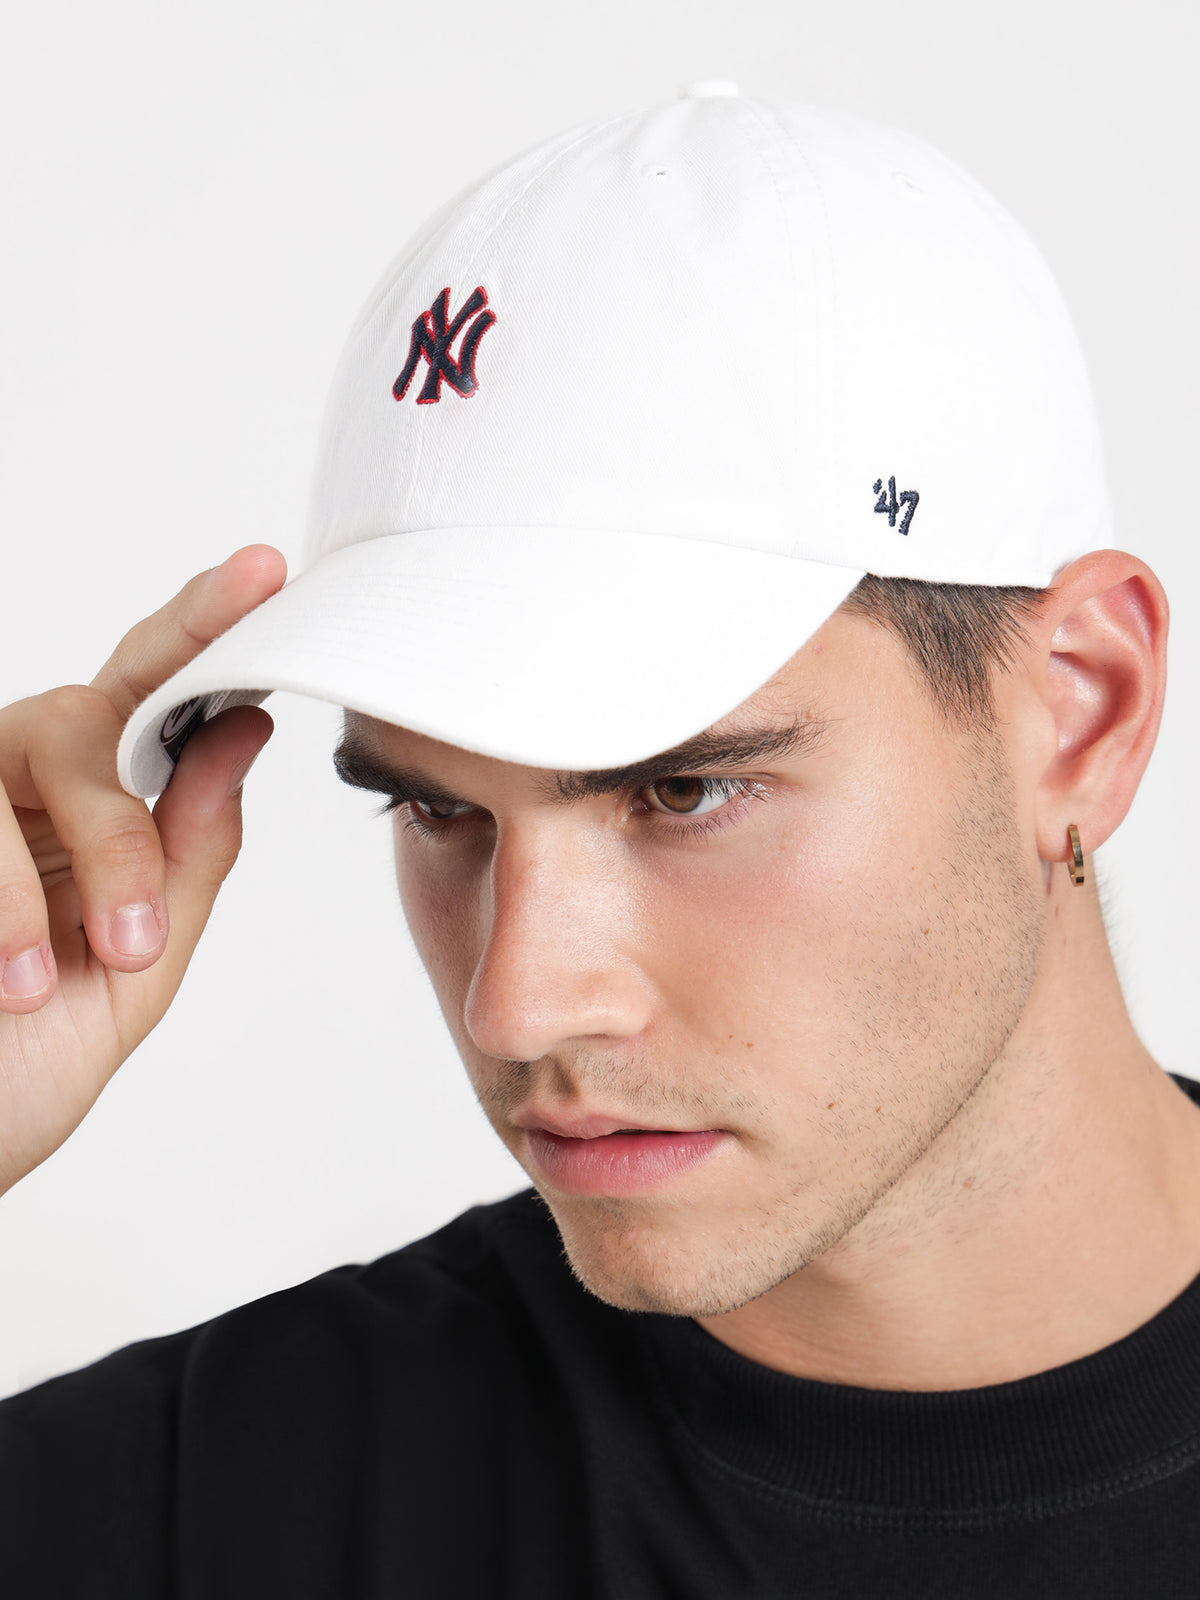 New York Yankees Adjustable Strapback Cap in White